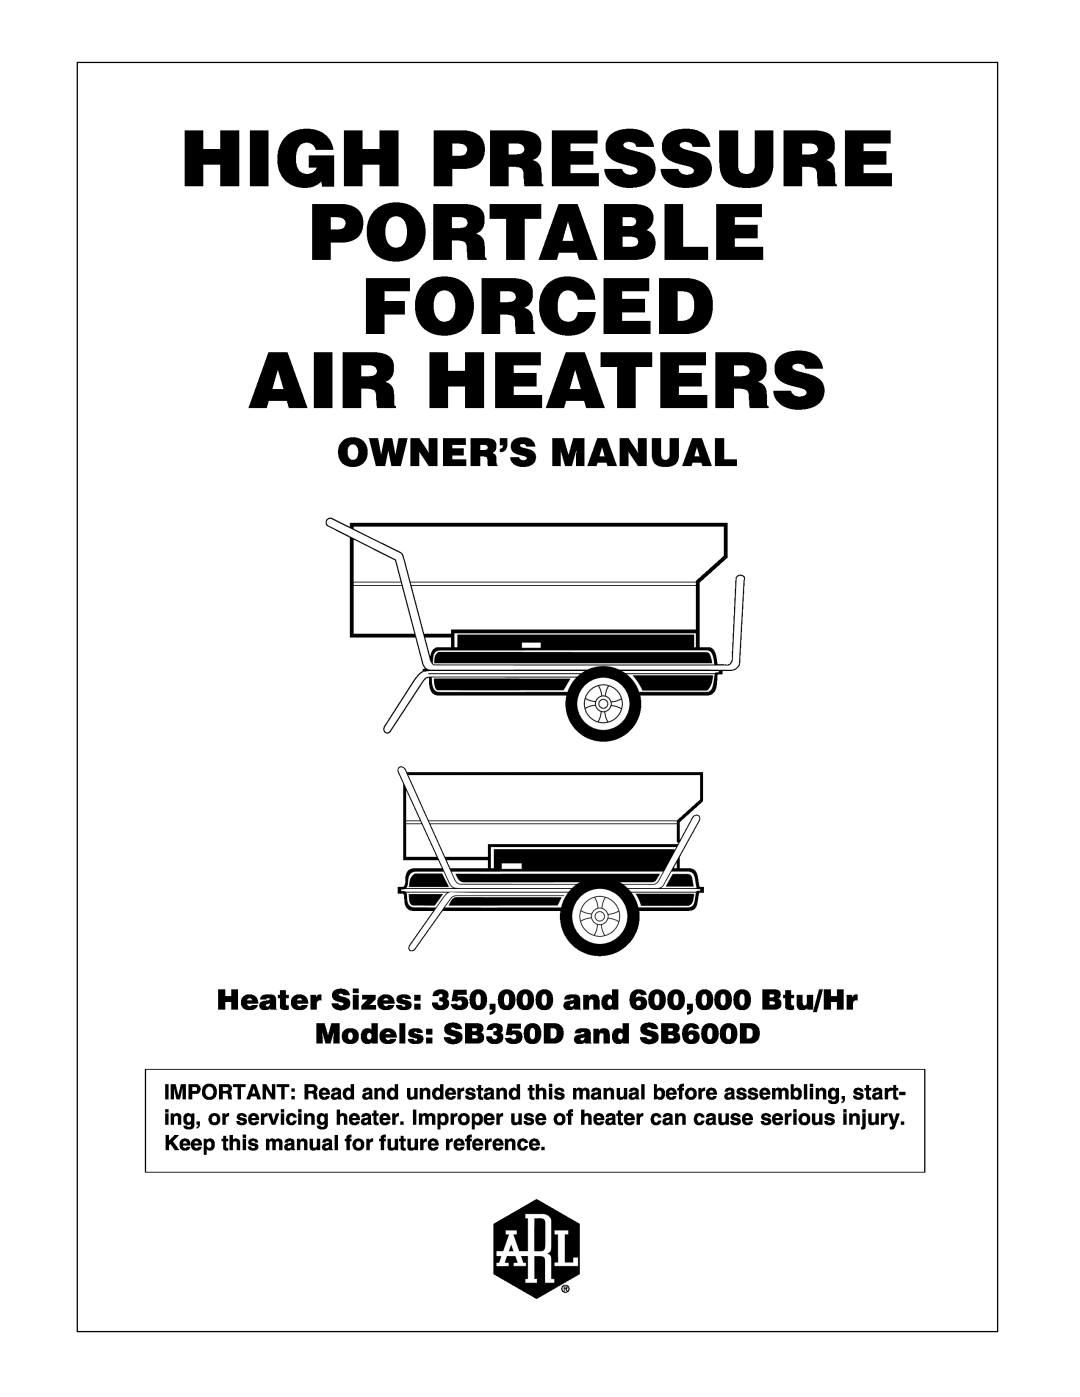 Desa owner manual Heater Sizes 350,000 and 600,000 Btu/Hr, Models SB350D and SB600D, Arl Logo, Side Pv 